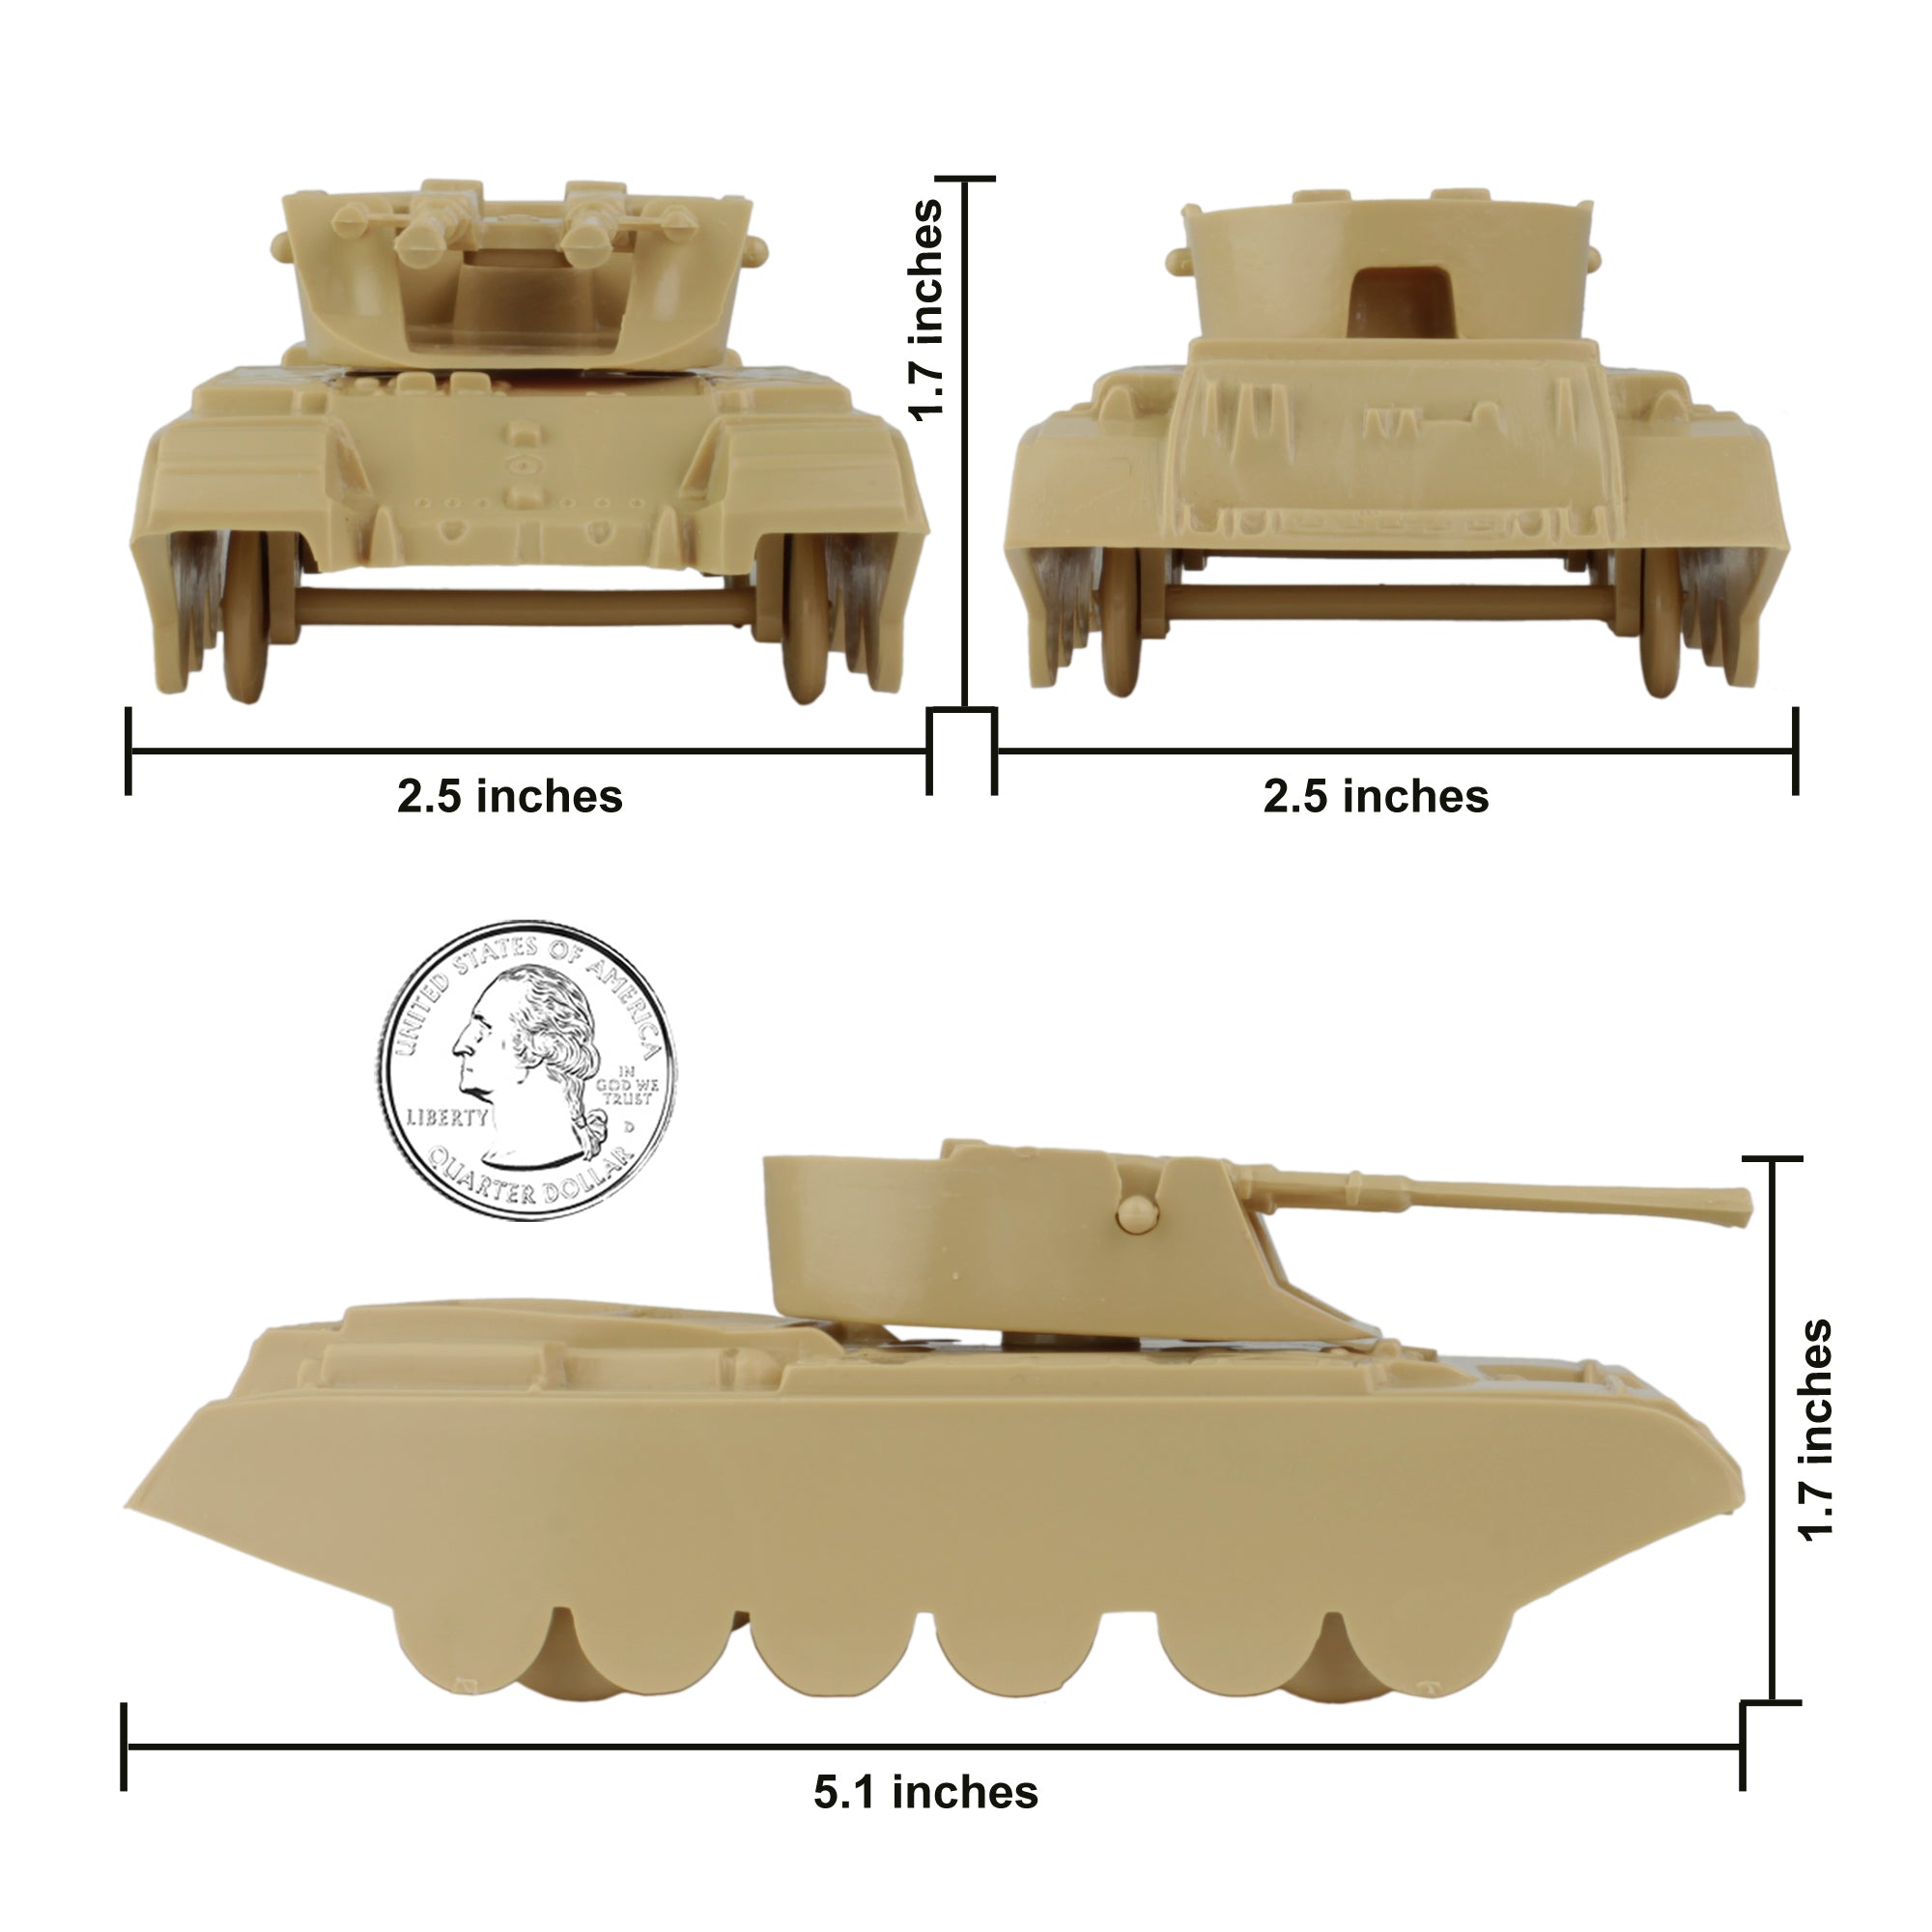 BMC Classic Anti-Aircraft Tanks Tan Plastic Army Men Vehicles